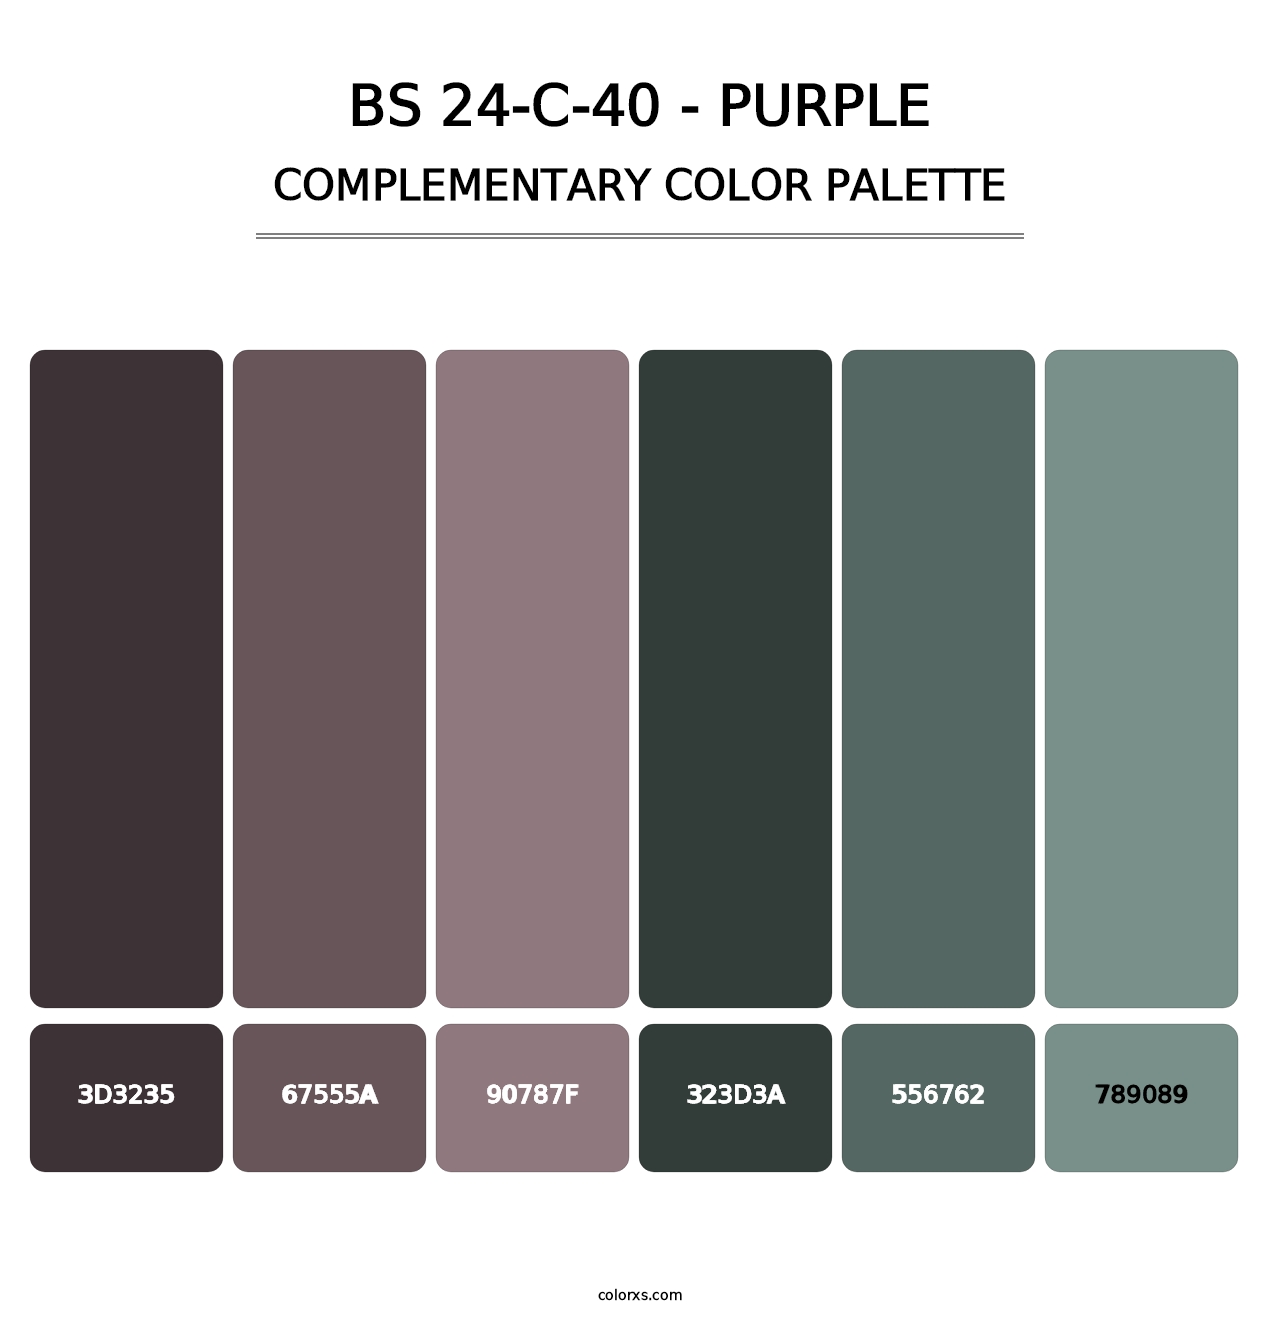 BS 24-C-40 - Purple - Complementary Color Palette